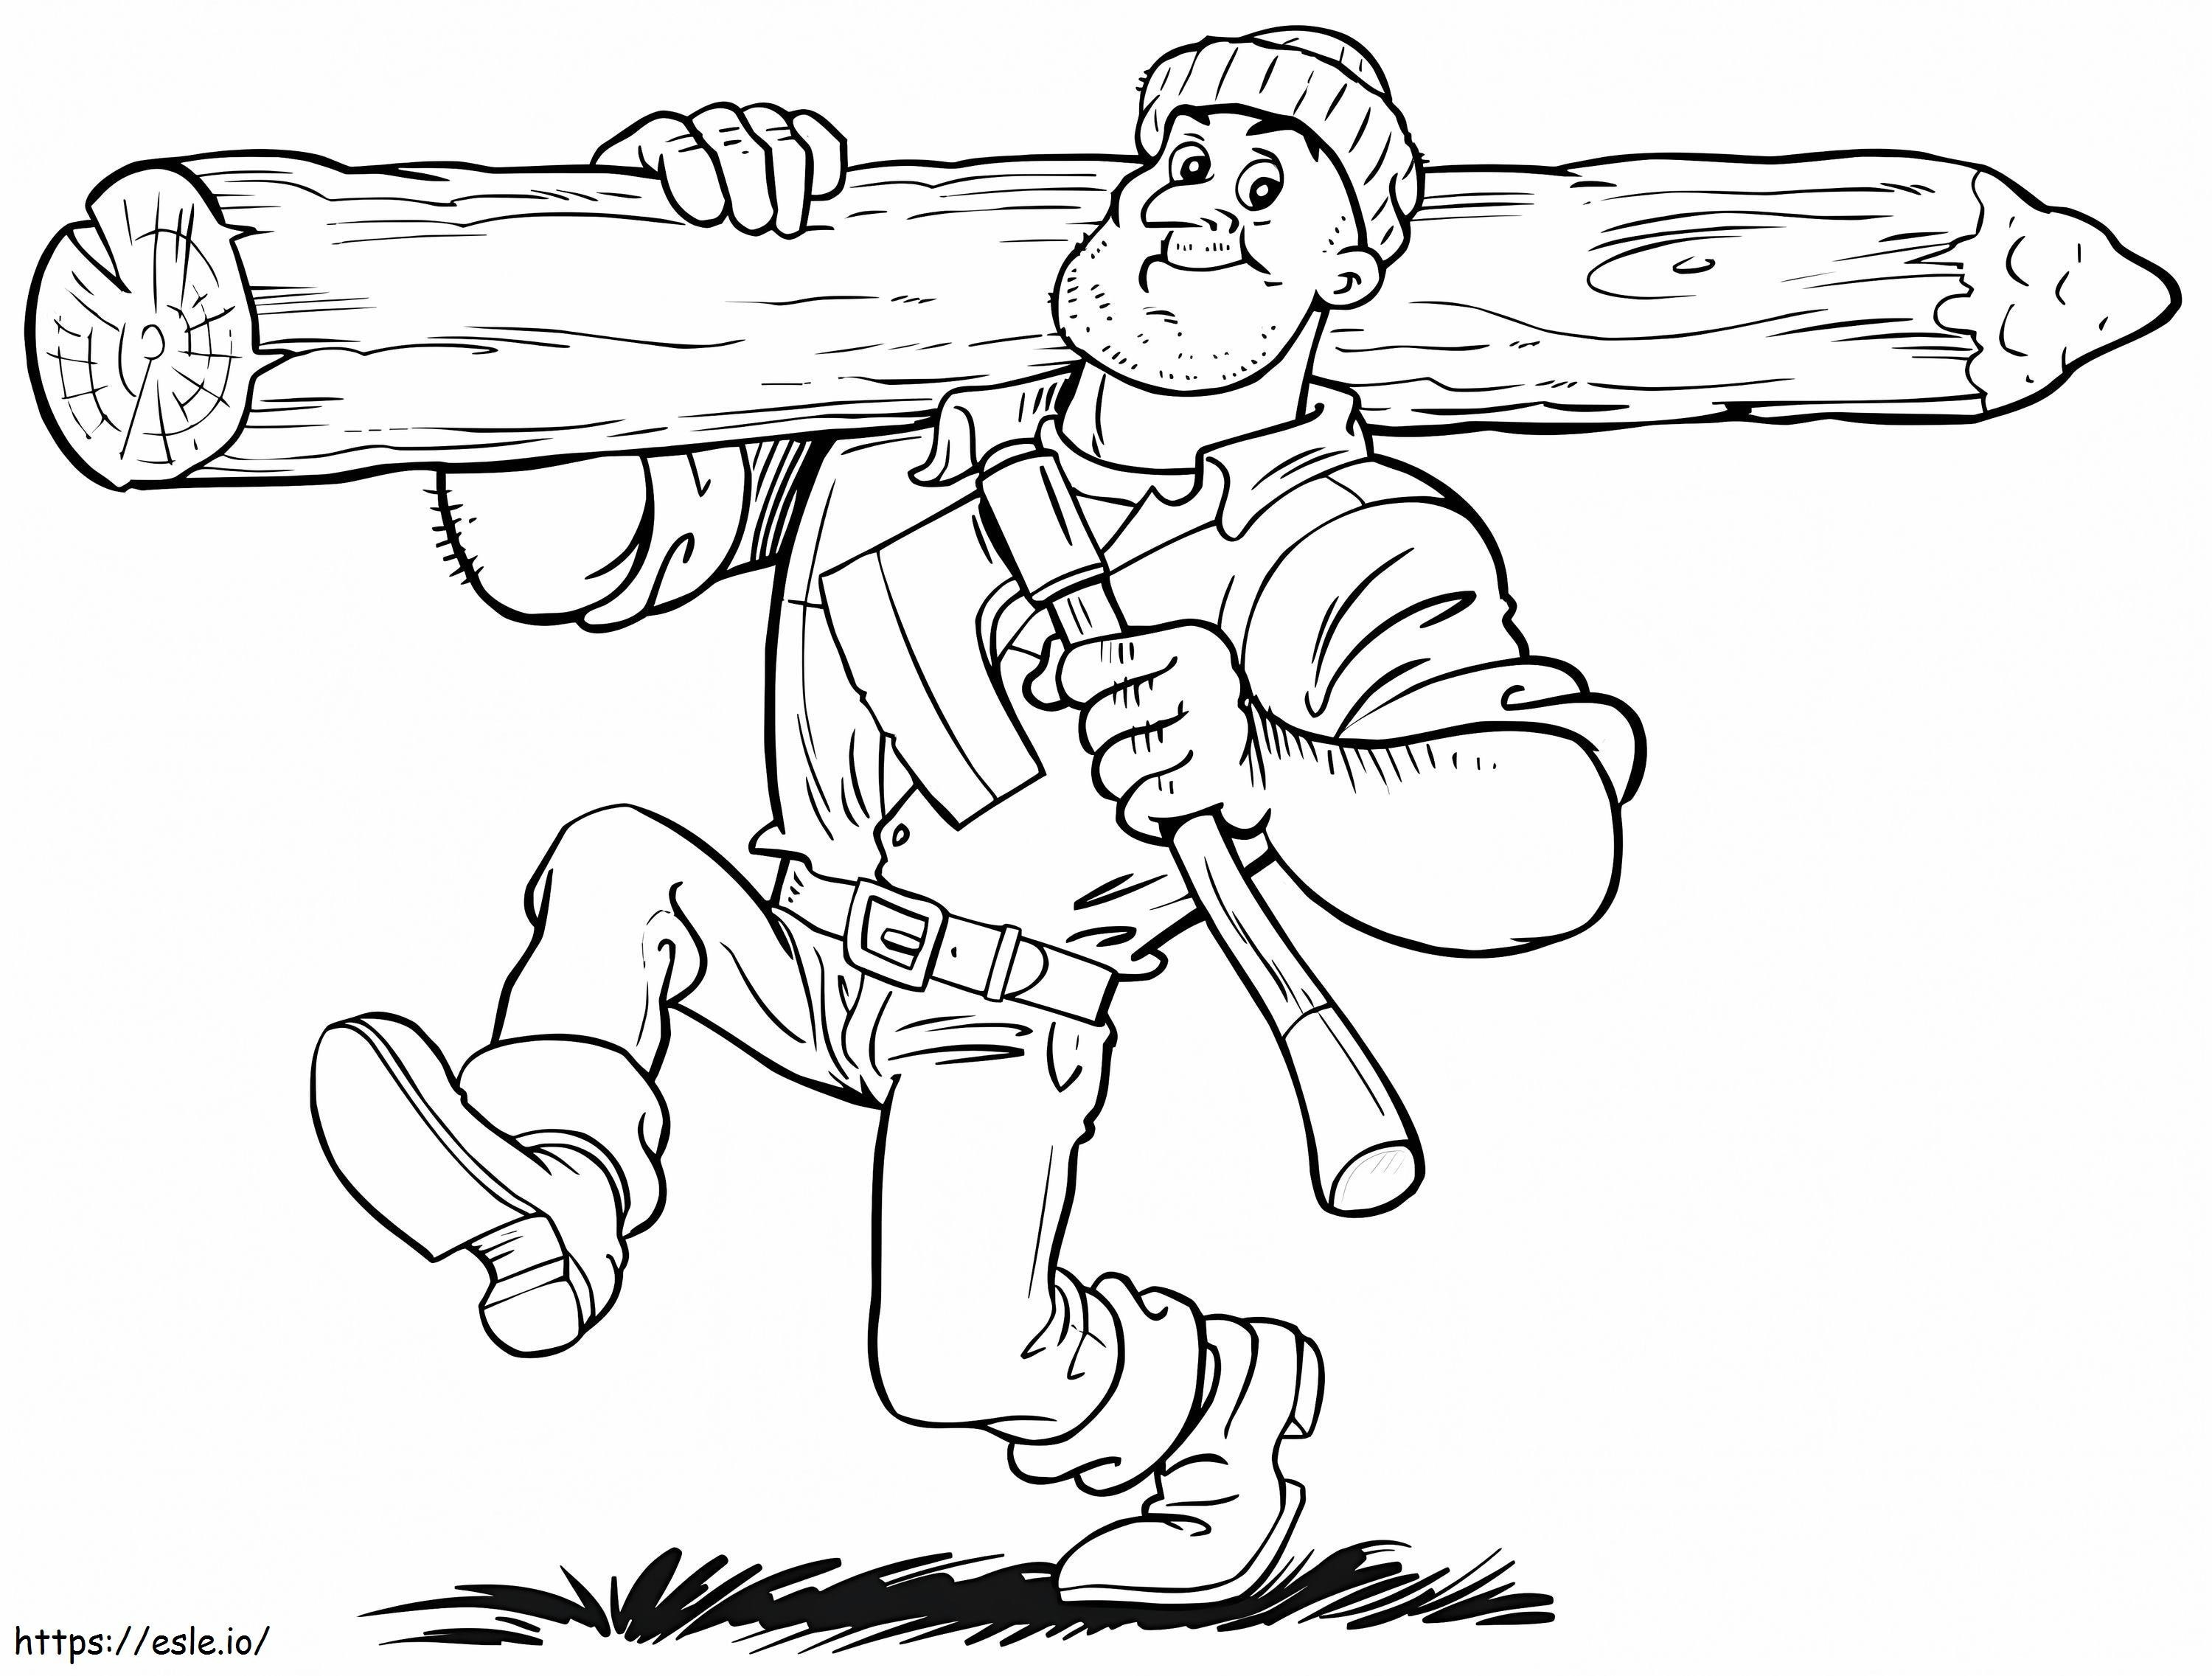 Happy Lumberjack coloring page